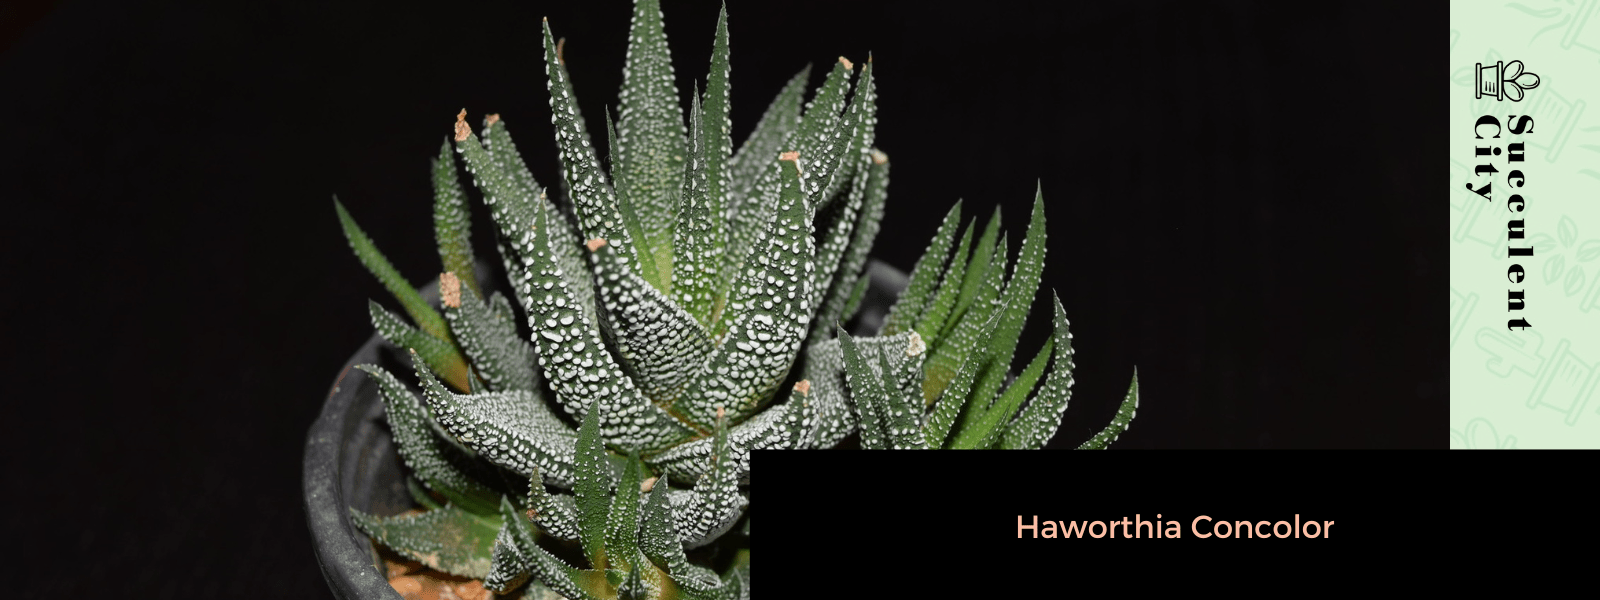 Haworthia Concolor